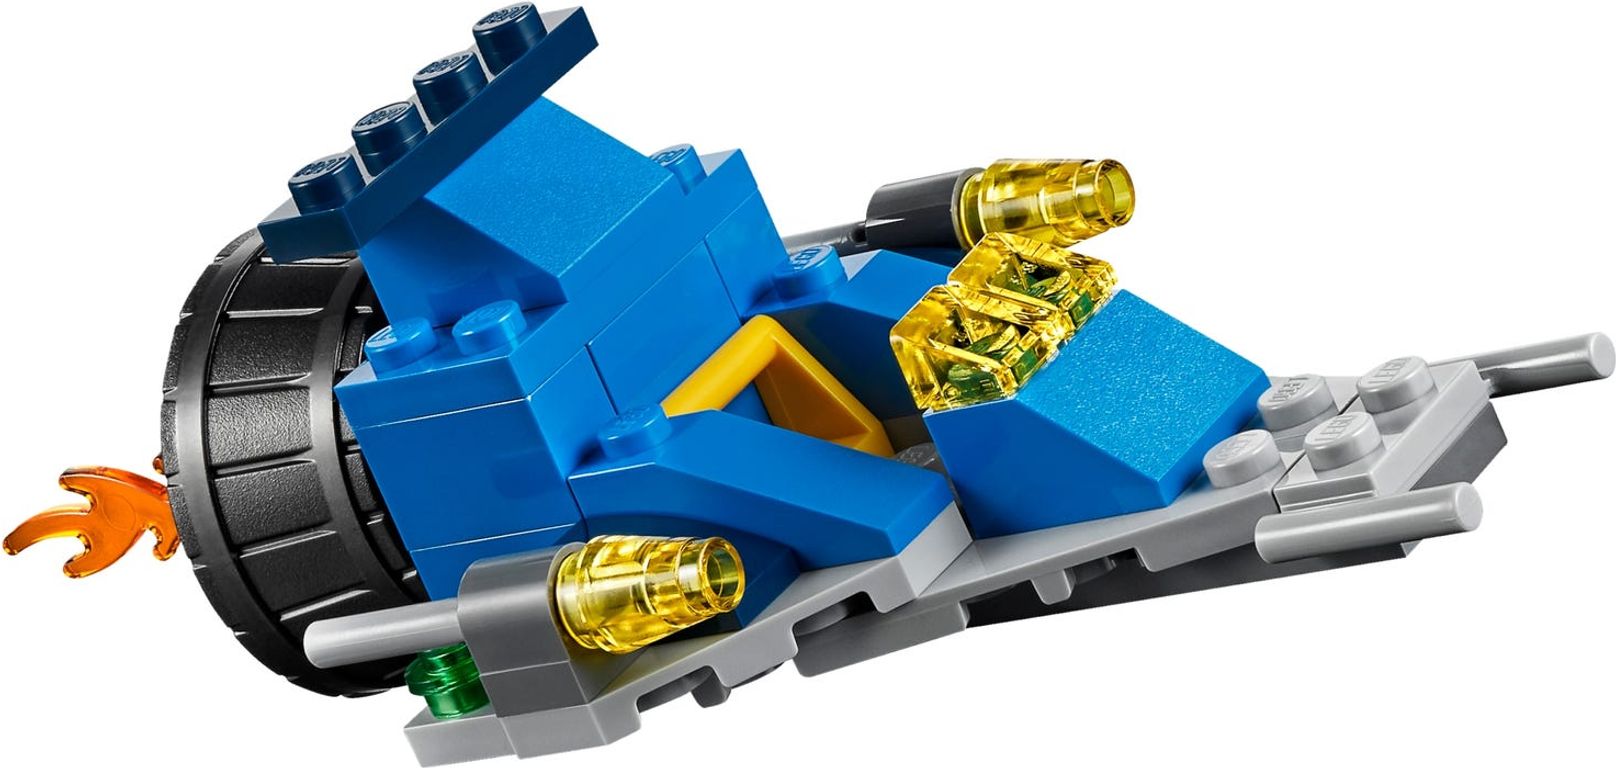 LEGO® Classic Ocean's Bottom components